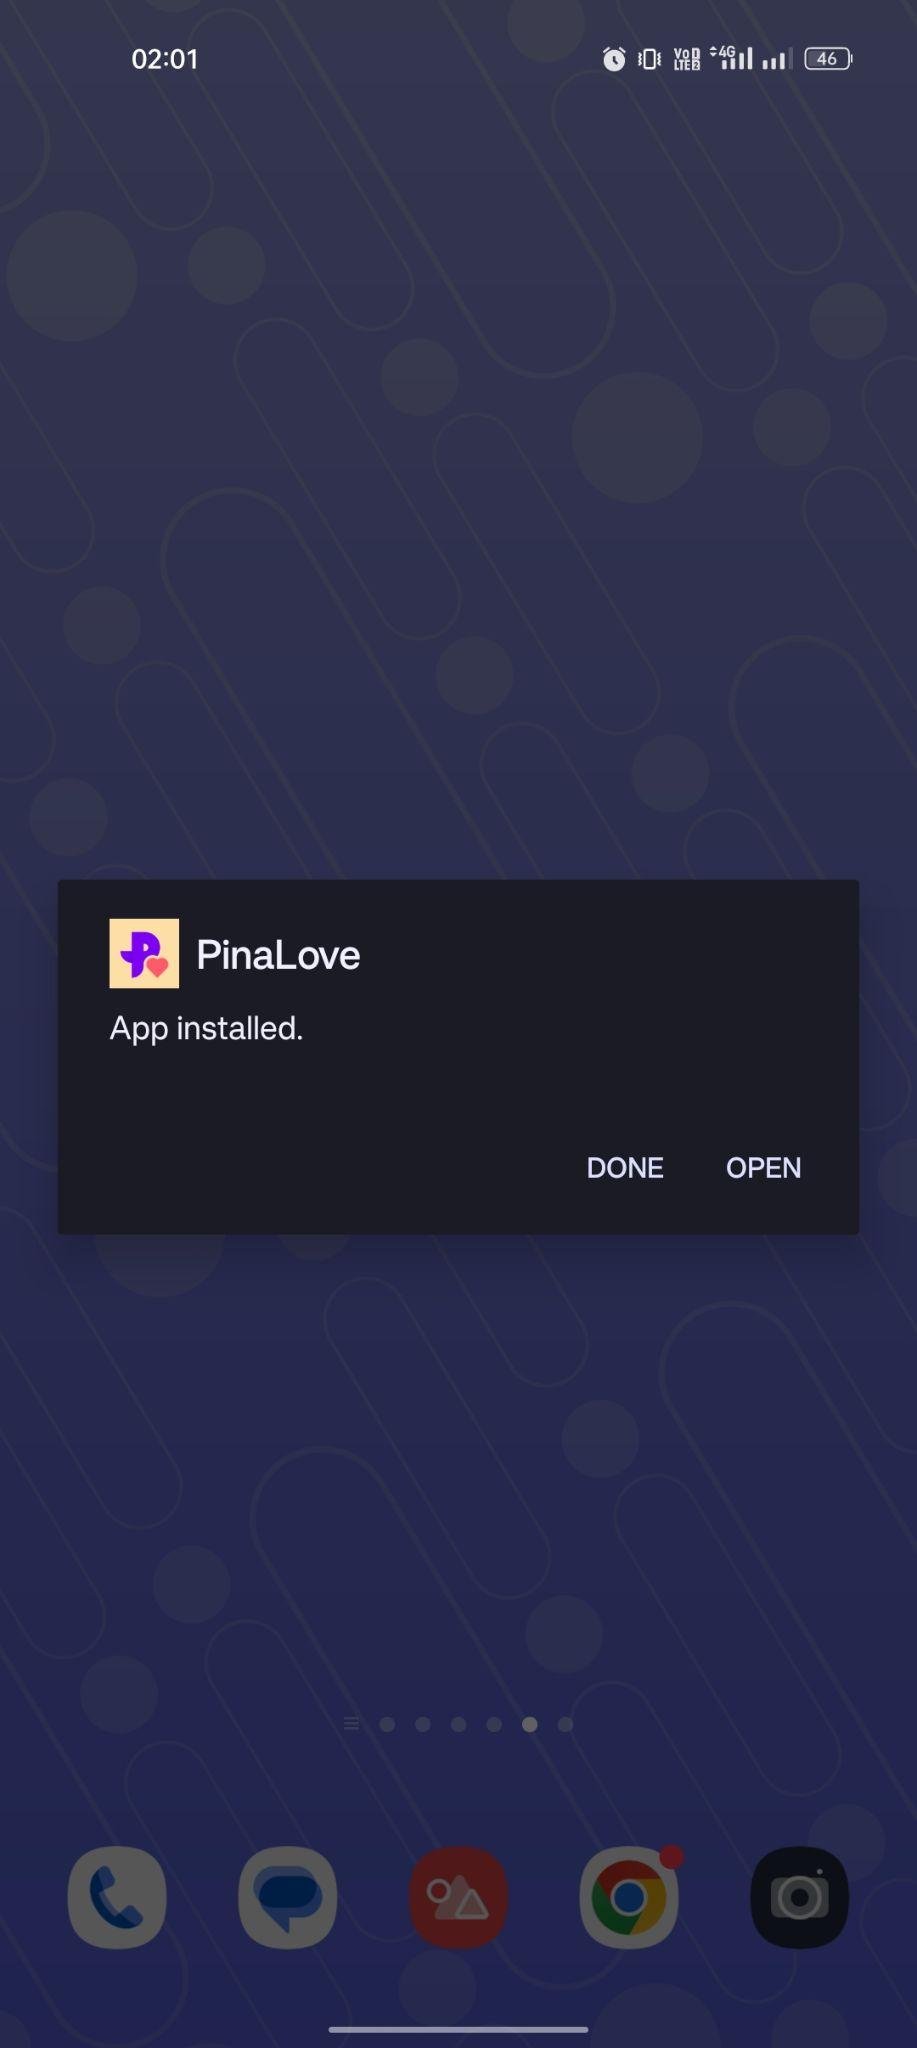 PinaLove apk installed